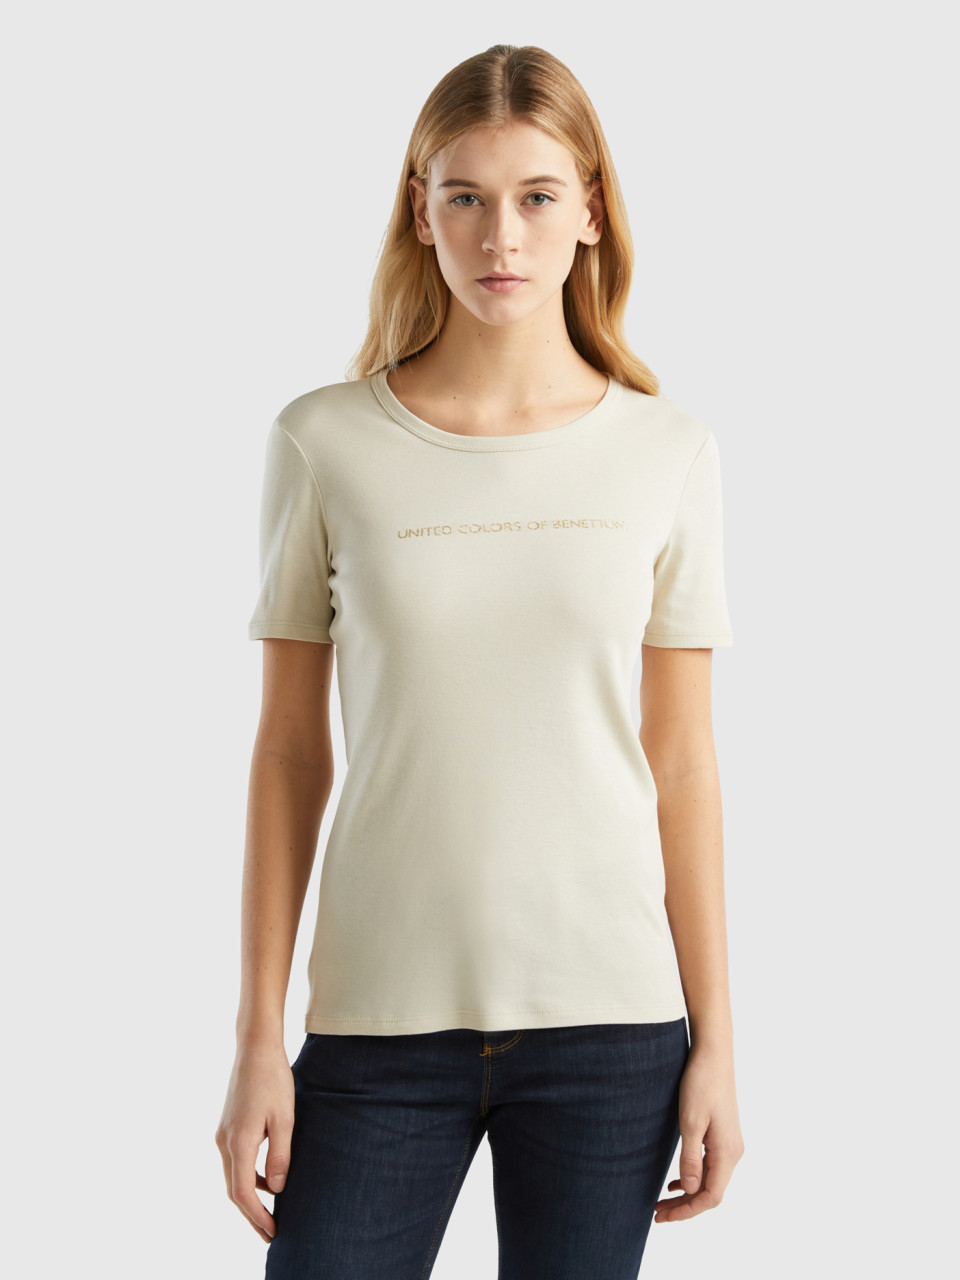 Benetton, T-shirt In 100% Cotton With Glitter Print Logo, Beige, Women